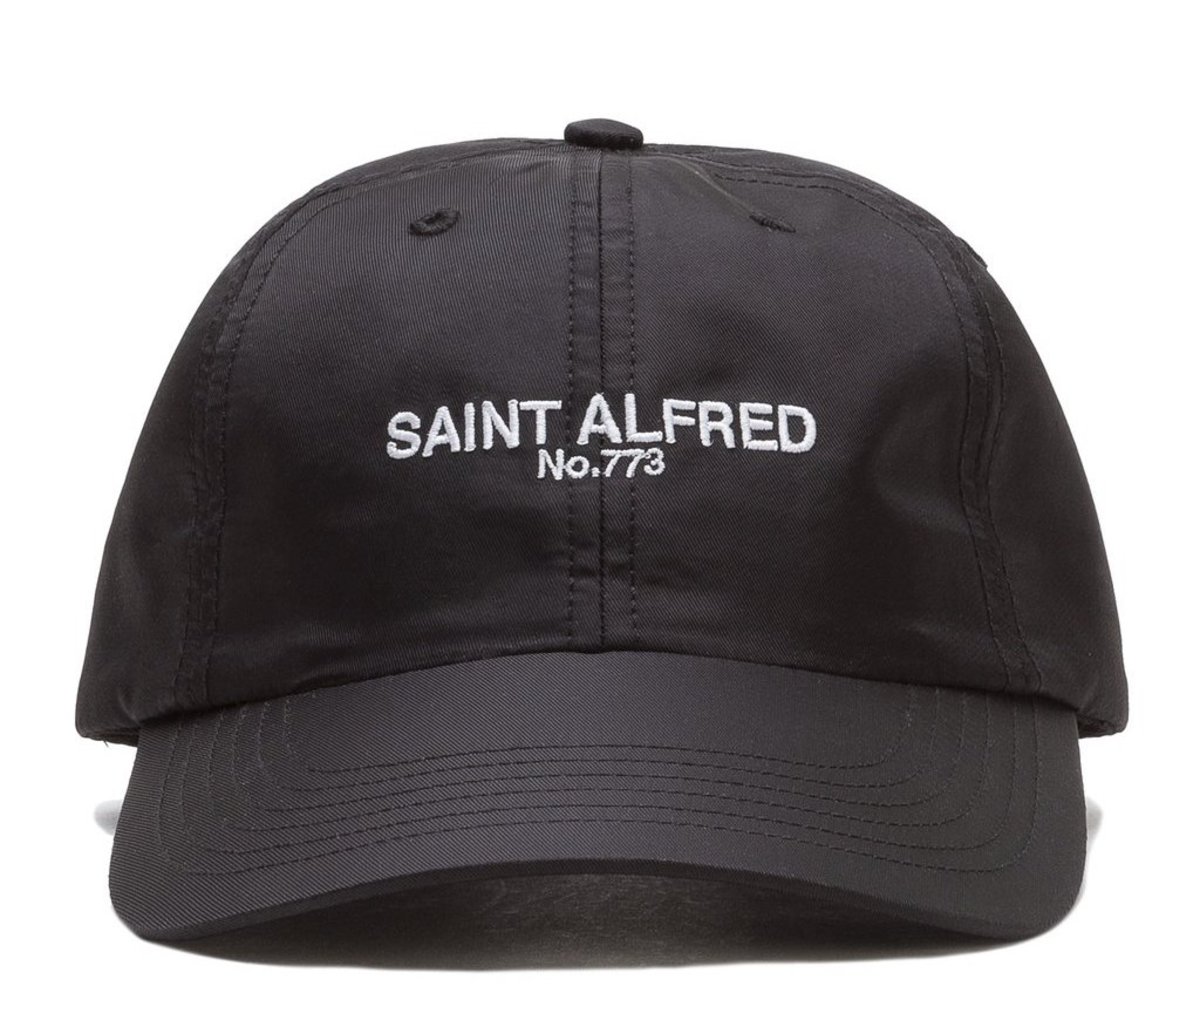 saint-alfred-ss20-nylon-dad-cap-black-1_49164152246_o_1024x1024